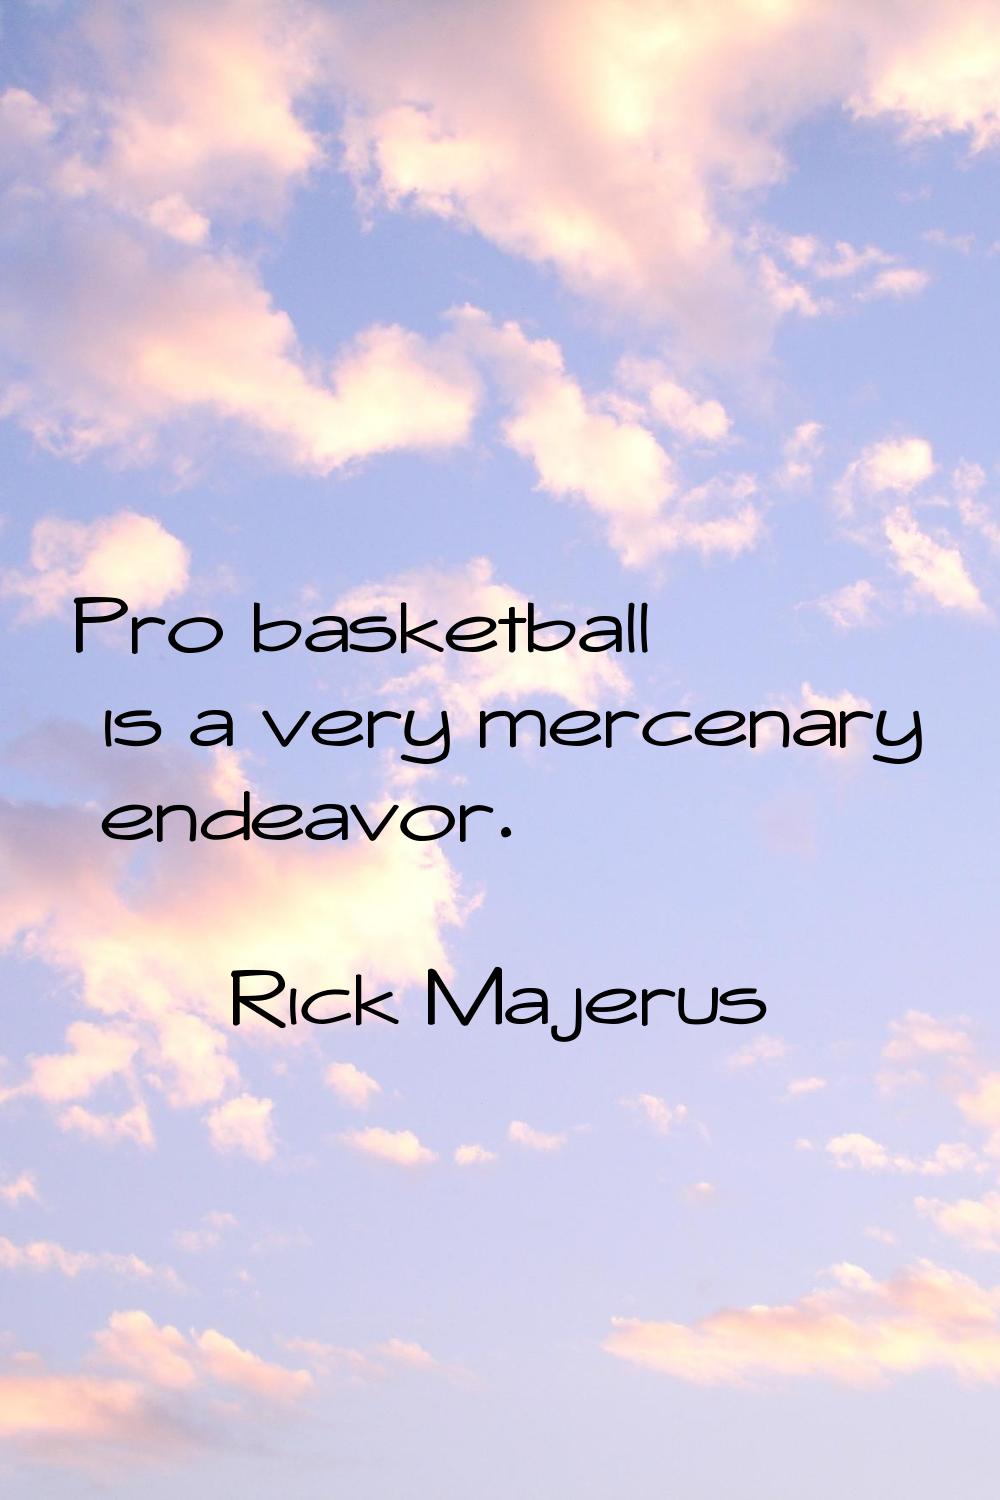 Pro basketball is a very mercenary endeavor.